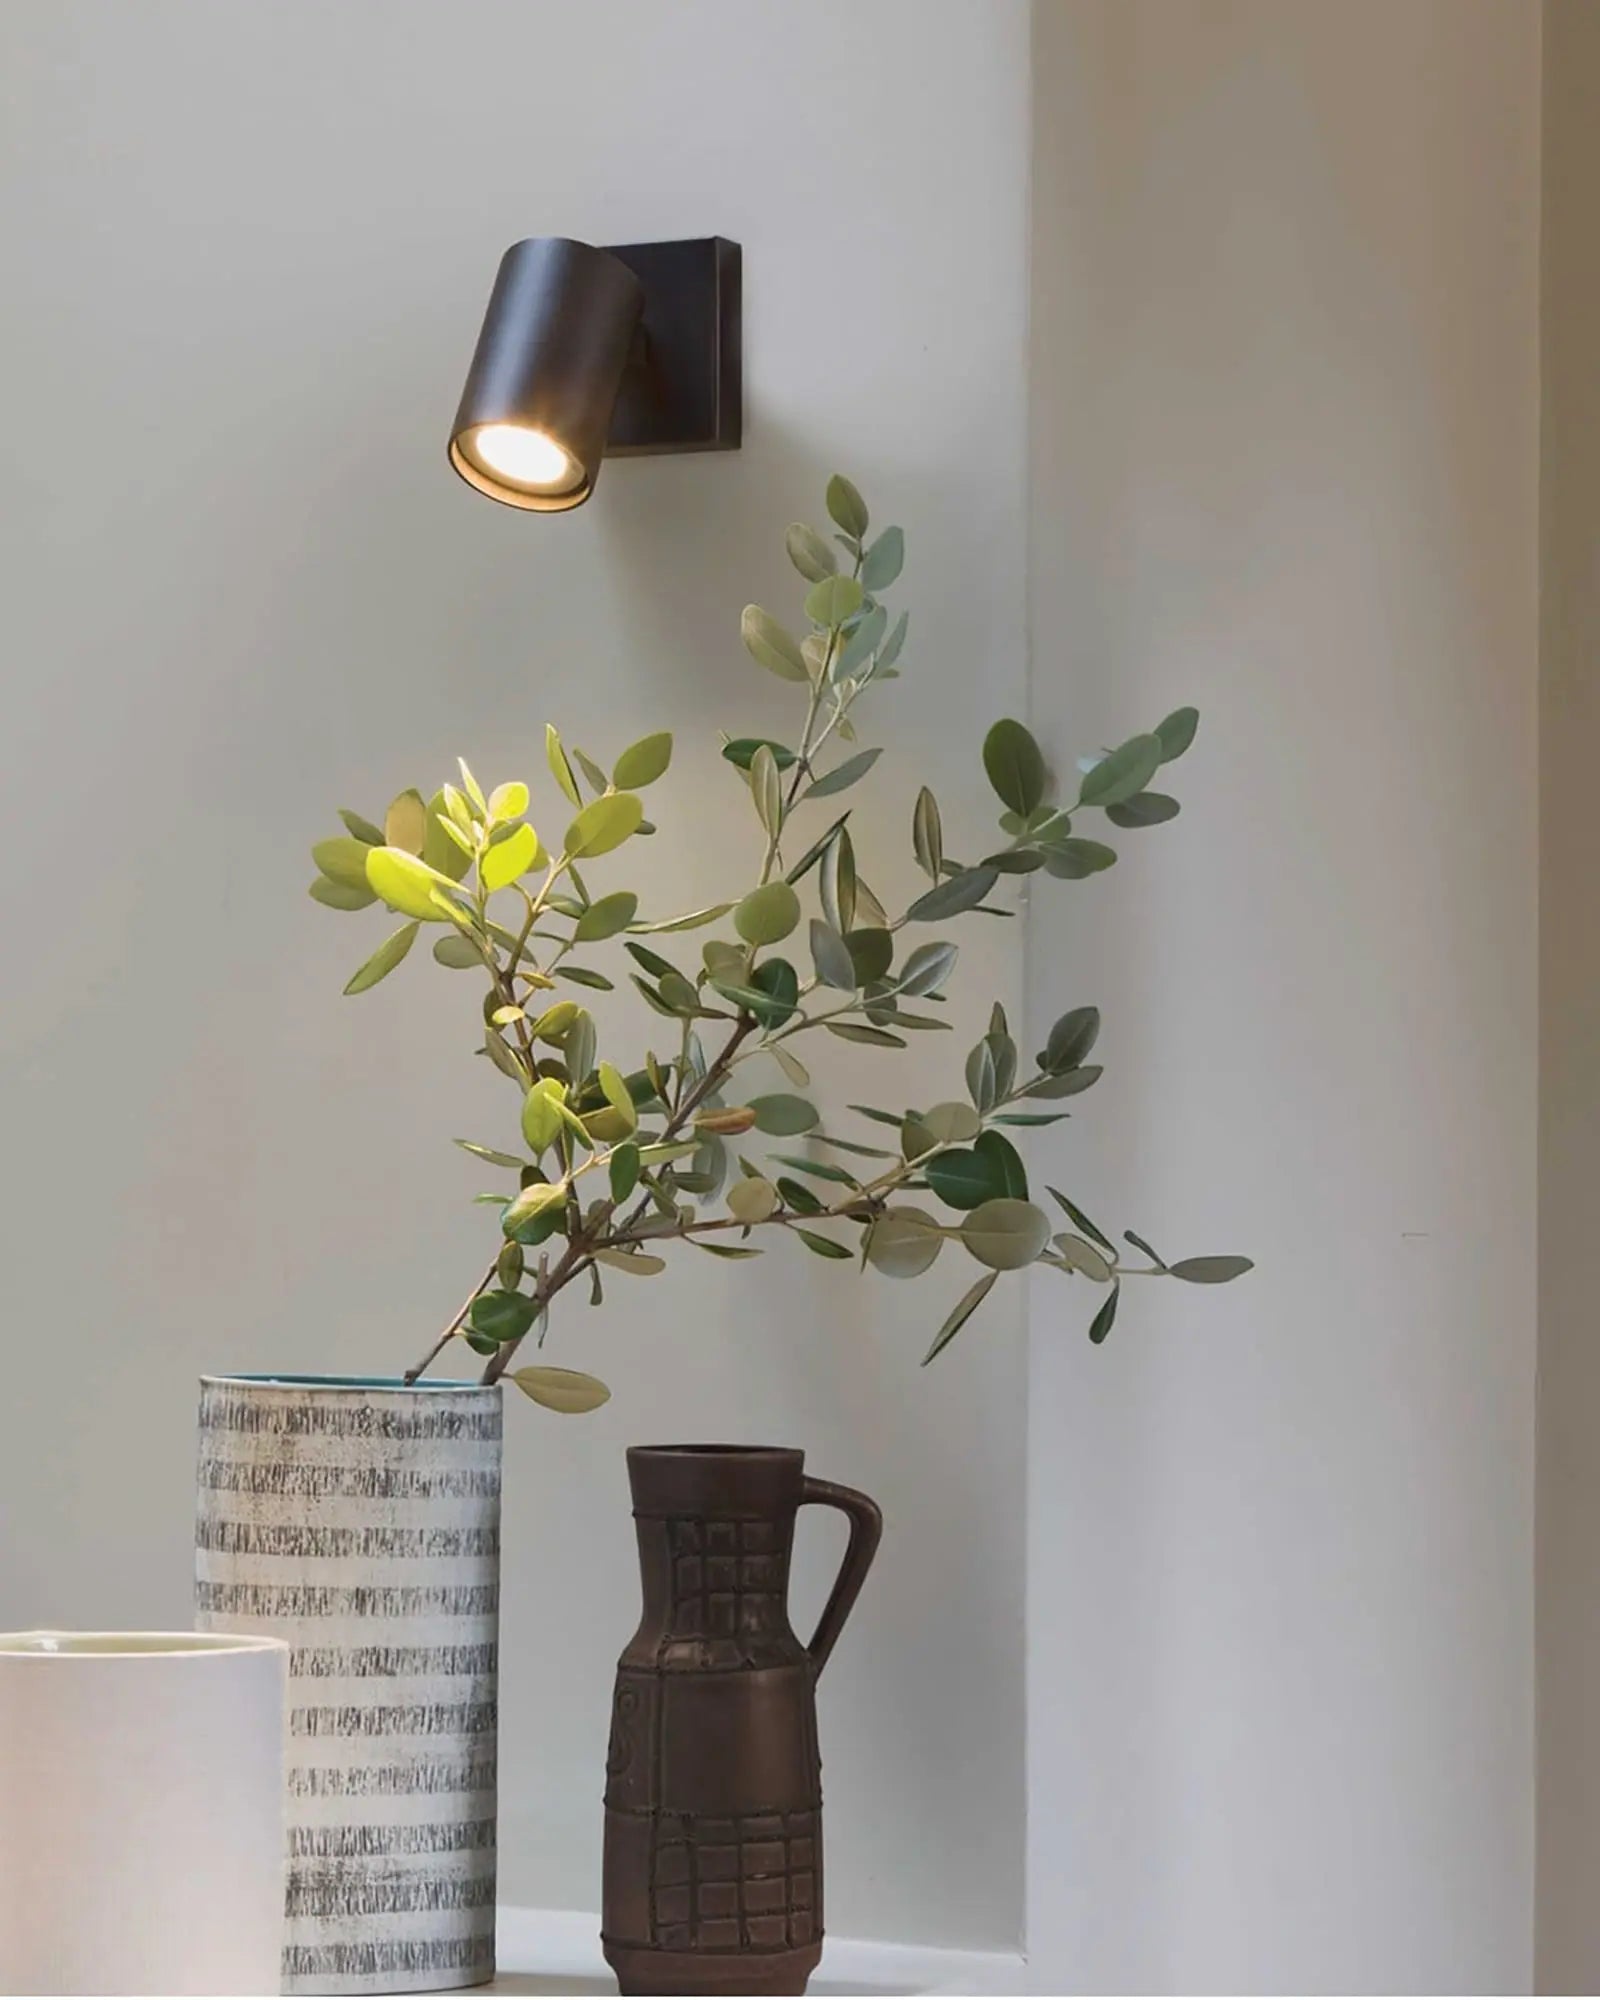 Ascoli minimal wall light with adjustable head above a shelf